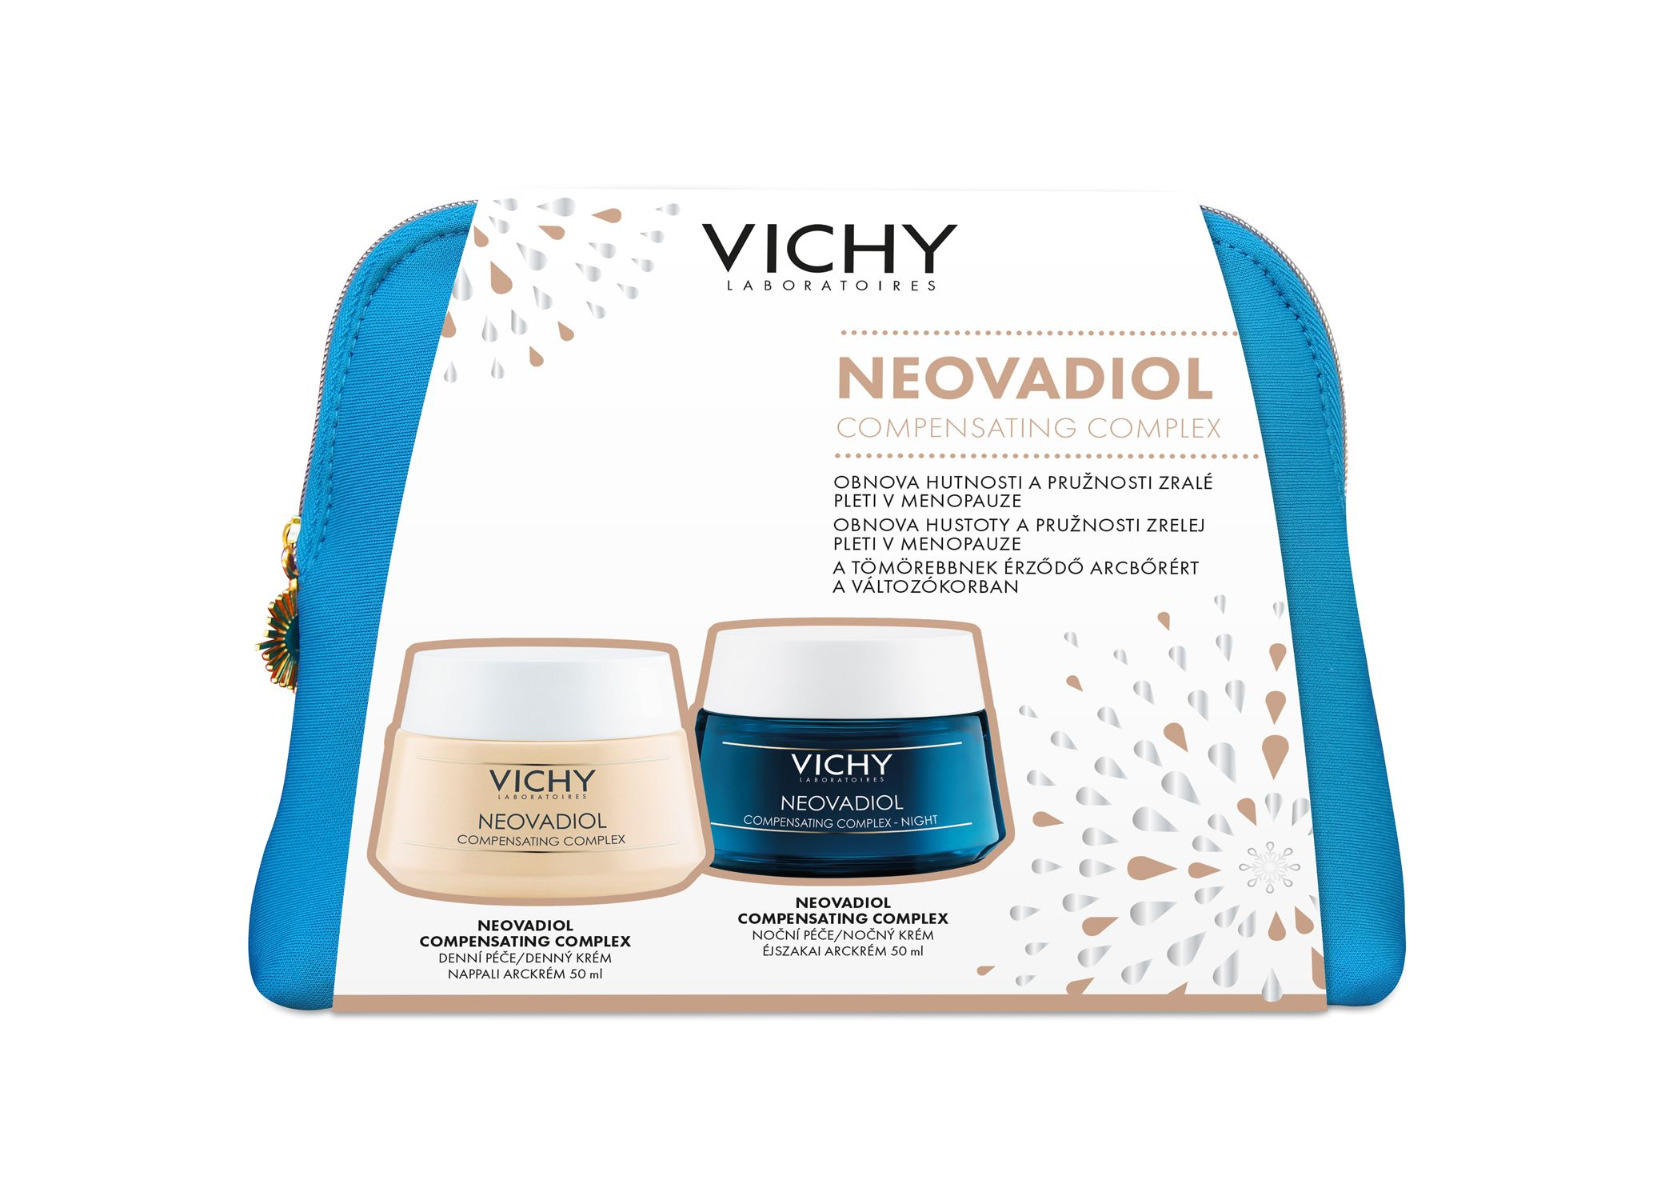 Vichy Neovadiol Compensating Complex vánoční balíček 2021 Vichy